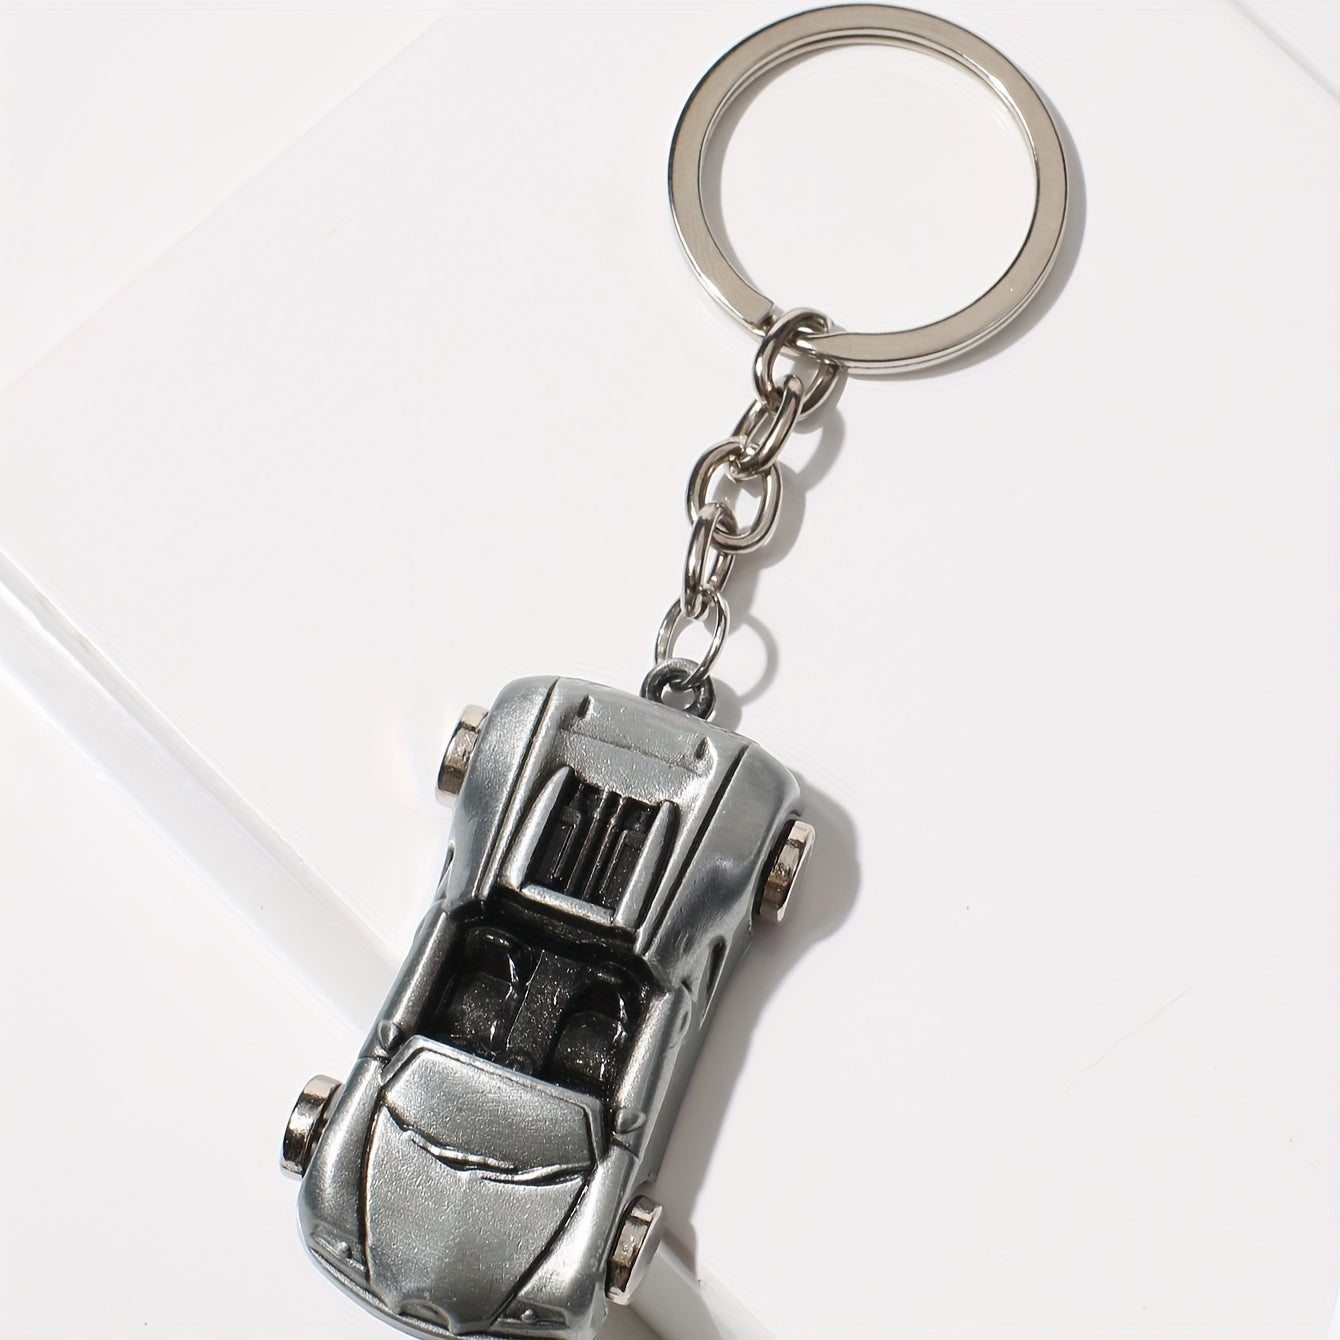 Mini Car Roadster Keychain Cool Alloy Key Chain Ring Purse Bag Backpack Charm Car Pendant